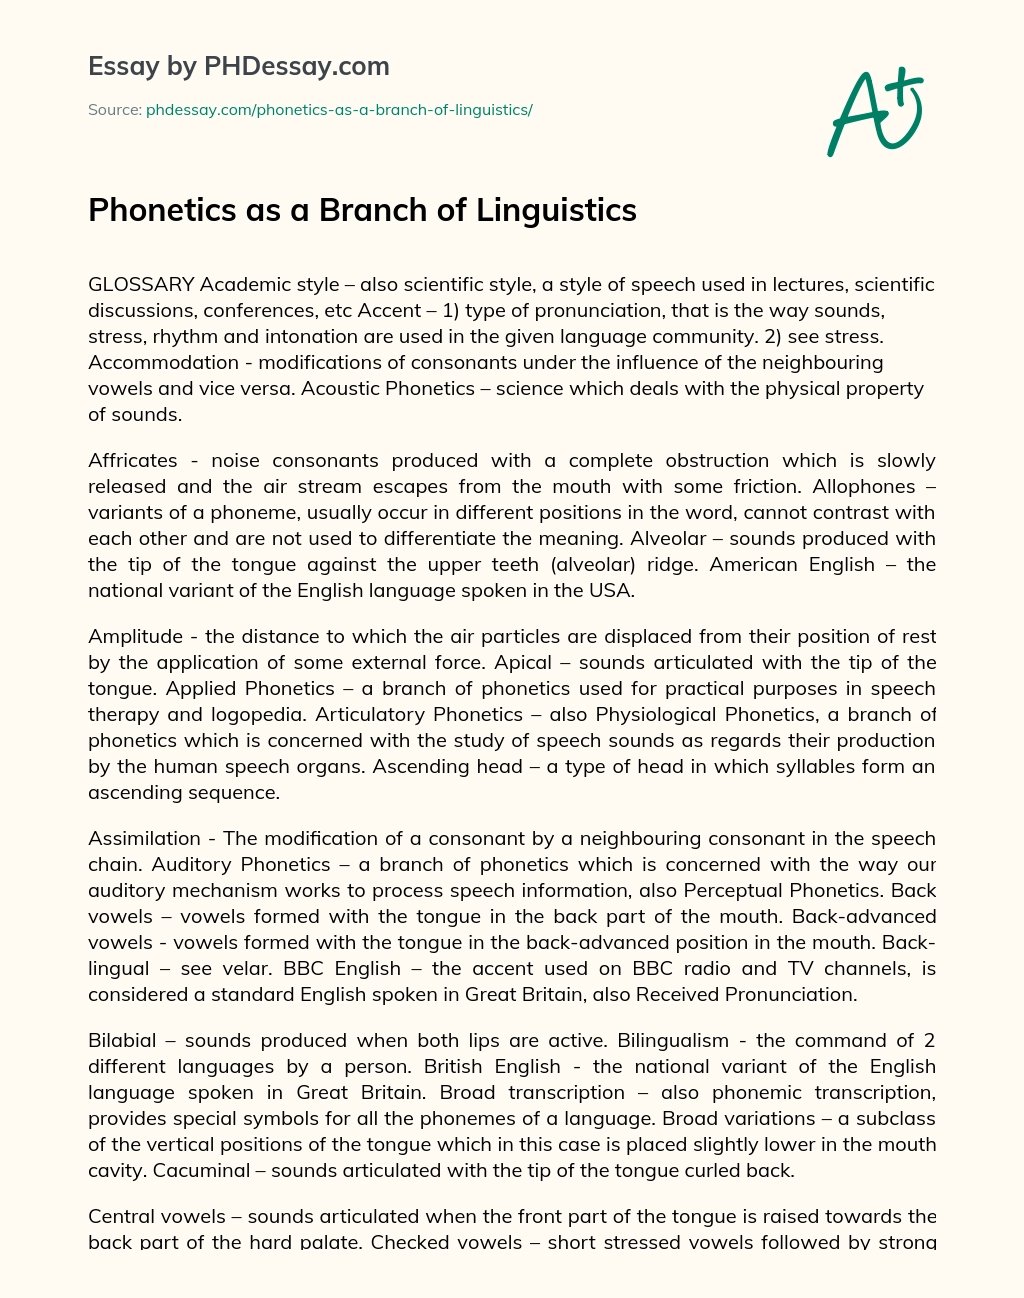 Phonetics as a Branch of Linguistics essay